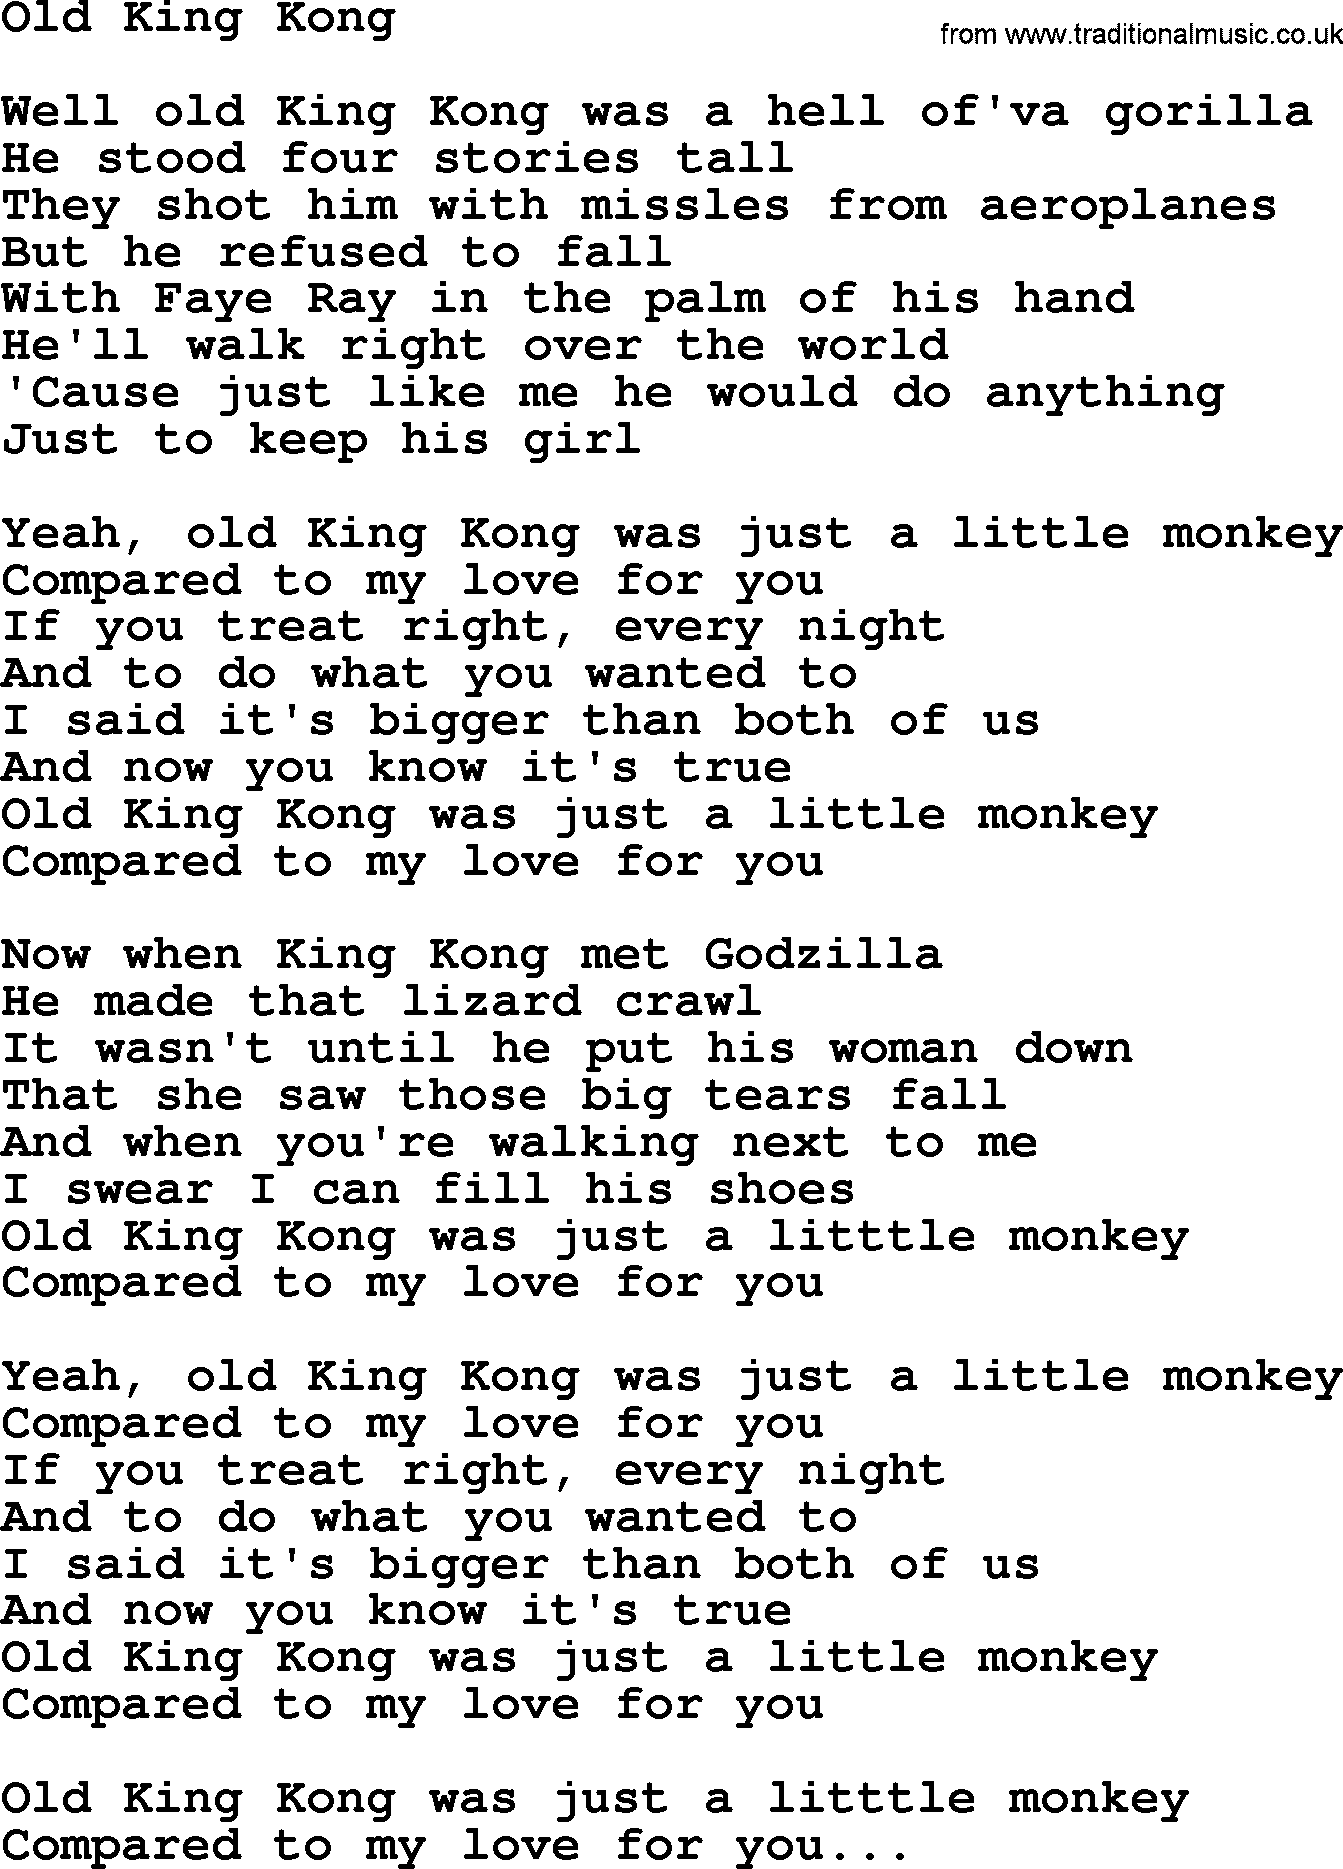 George Jones song: Old King Kong, lyrics